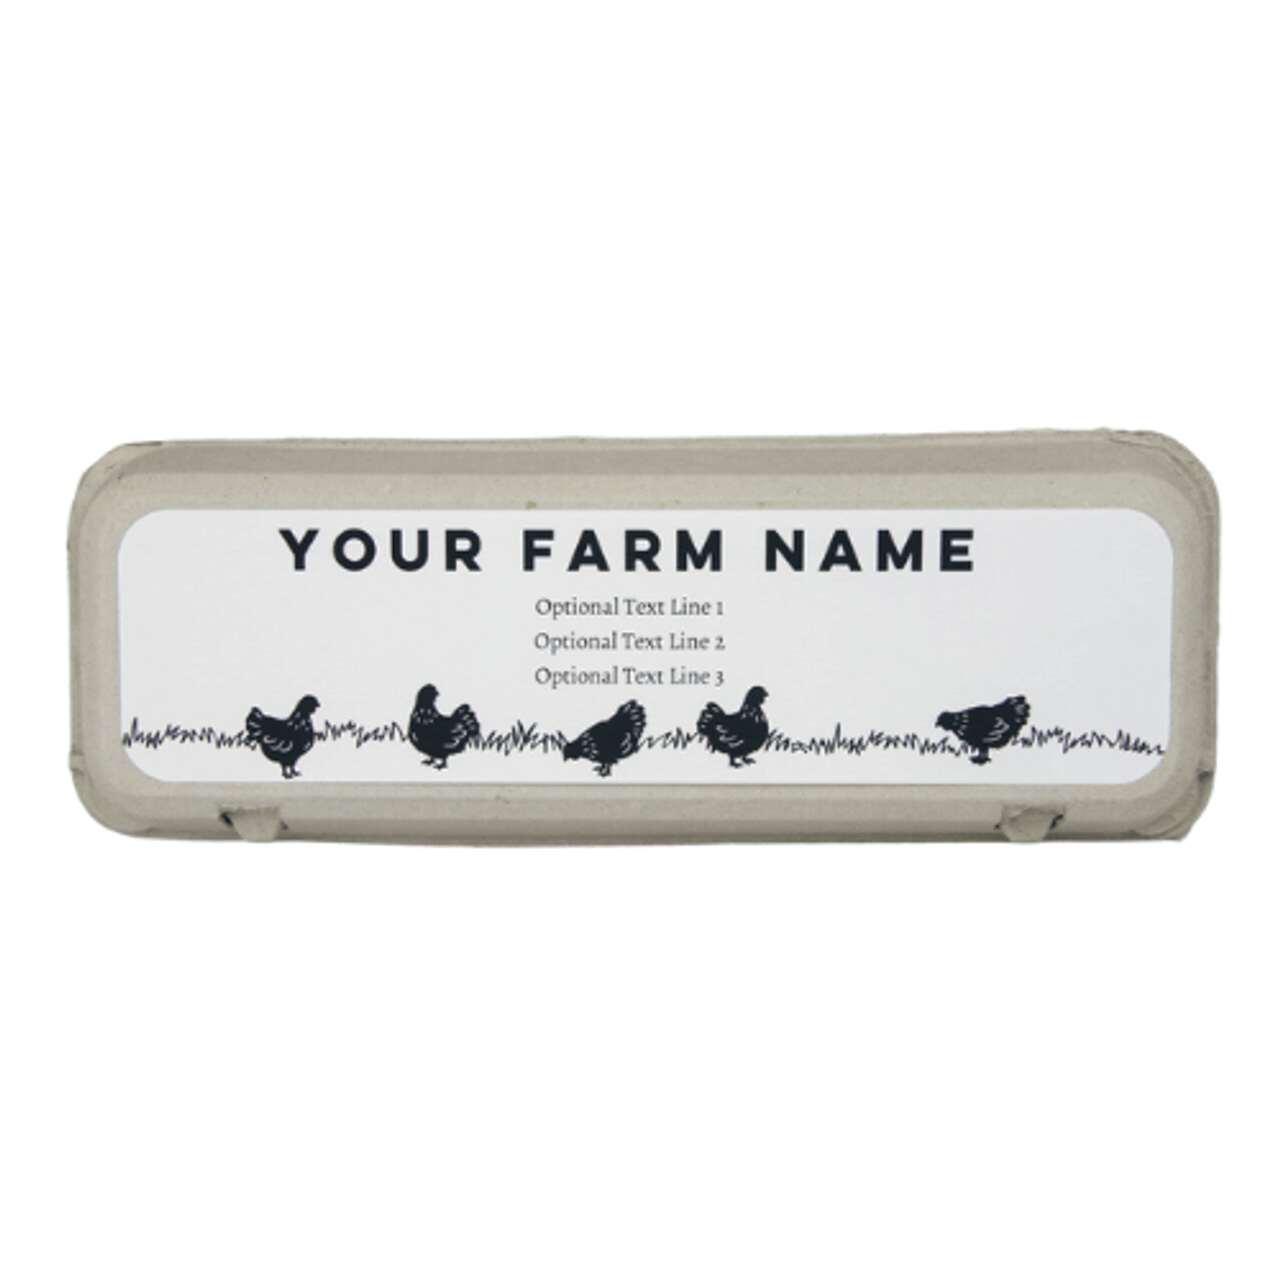 Custom Farm Name Stamp for Front of Egg Carton